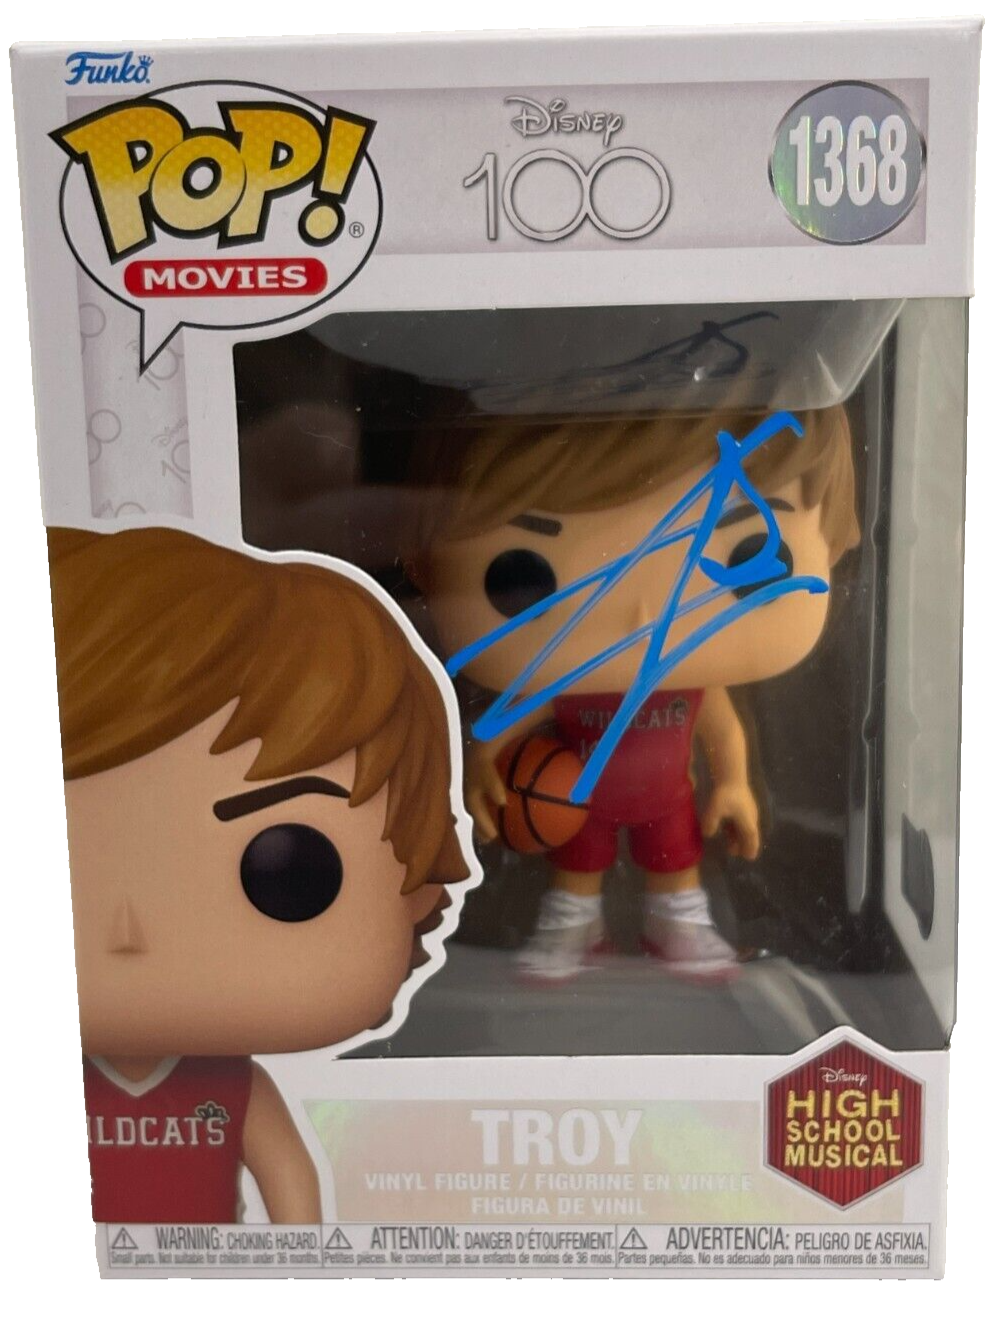 Zac Efron Authentic Autographed Troy High School Musical Disney 100 1368 Funko Pop Figure